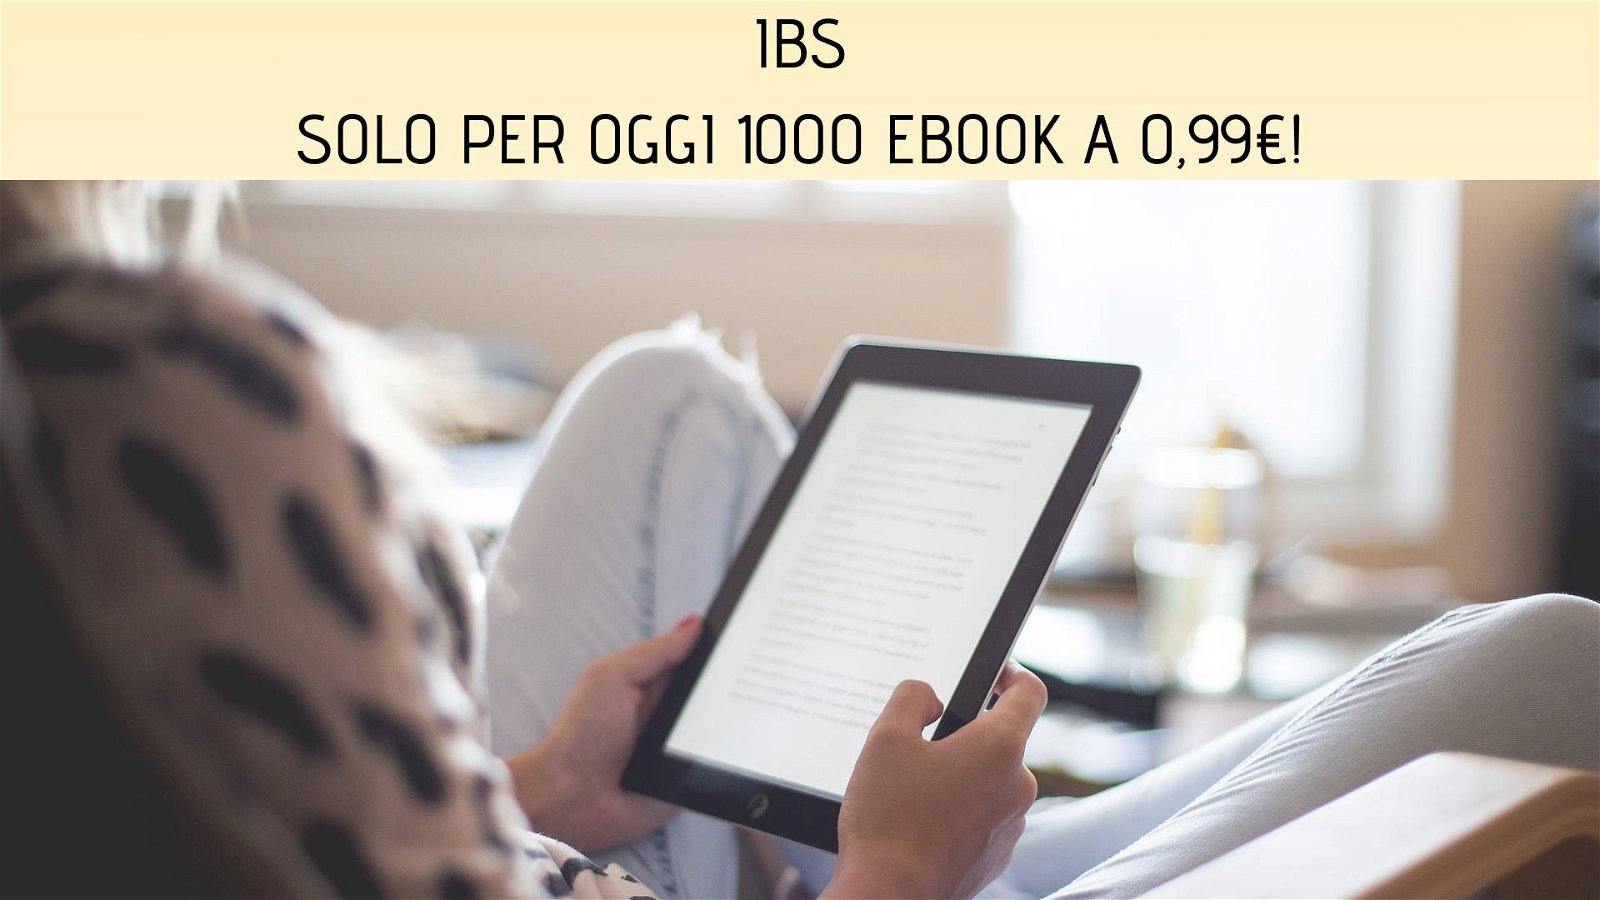 Immagine di 1000 eBook in offerta da 0,99€, solo per oggi su IBS!